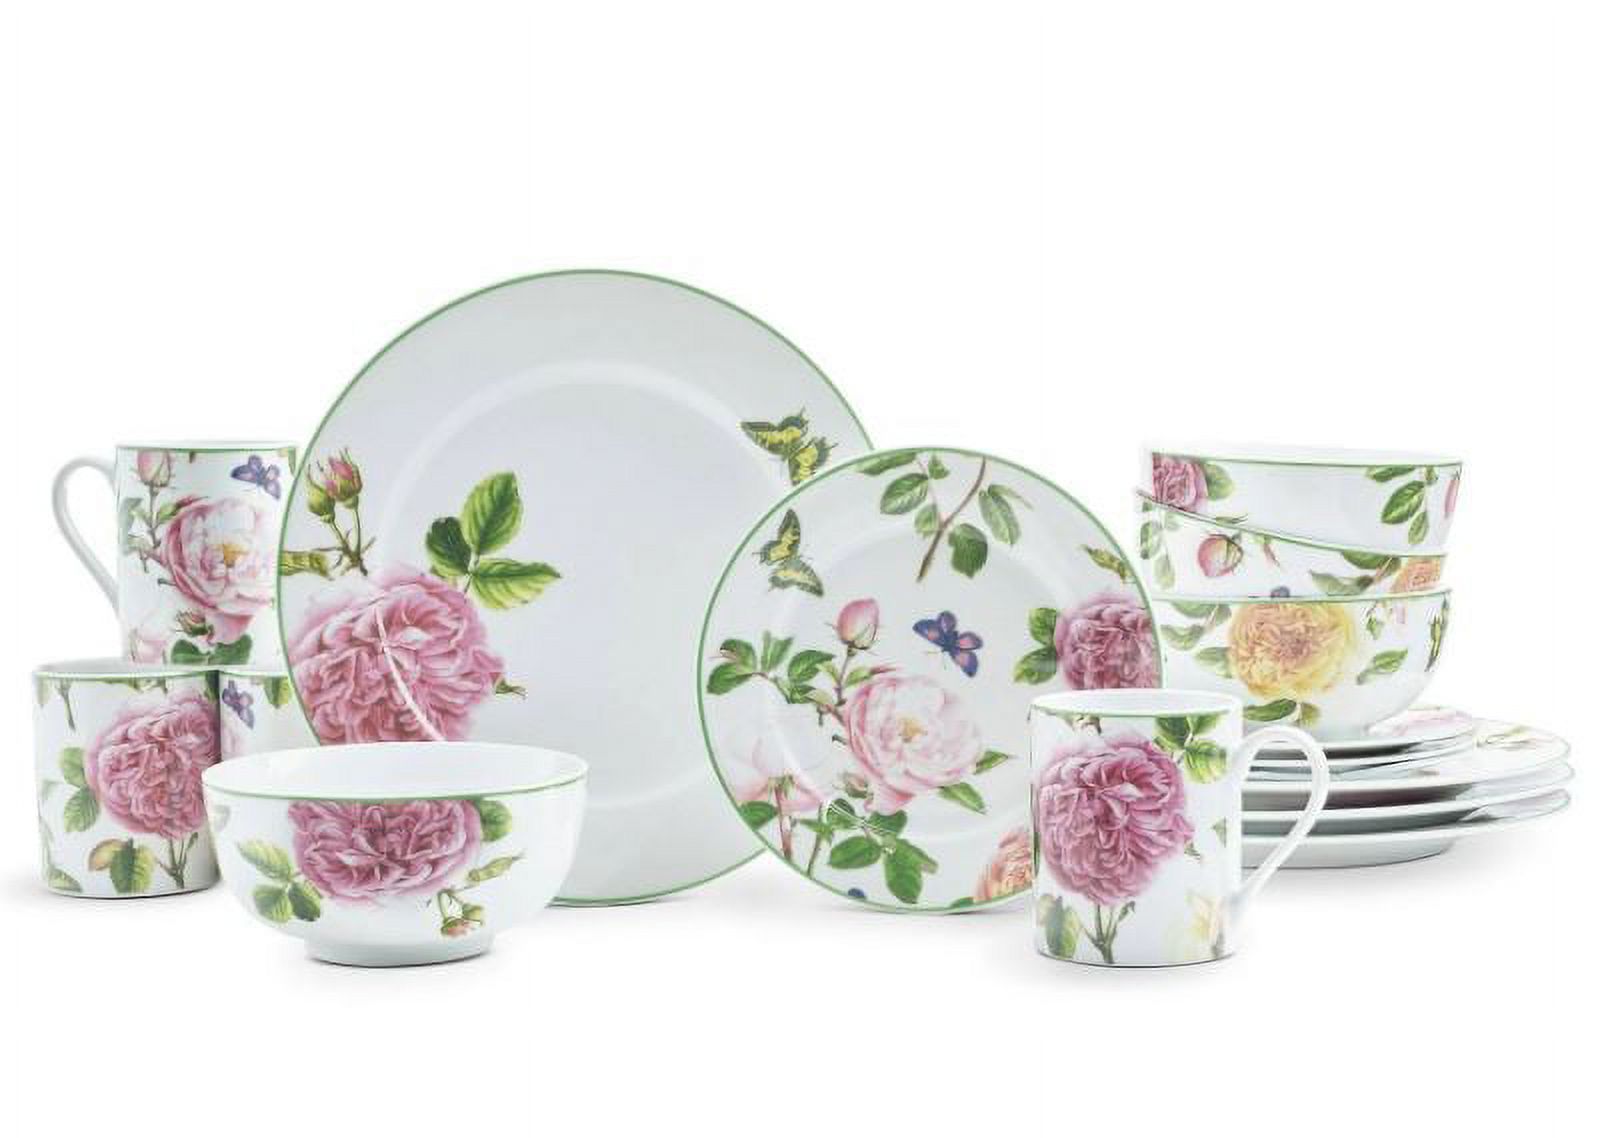 Spode Home Roses 16 Piece Dinnerware Set, Service for 4, Made of Fine Porcelain, Dishwasher Safe - image 3 of 5